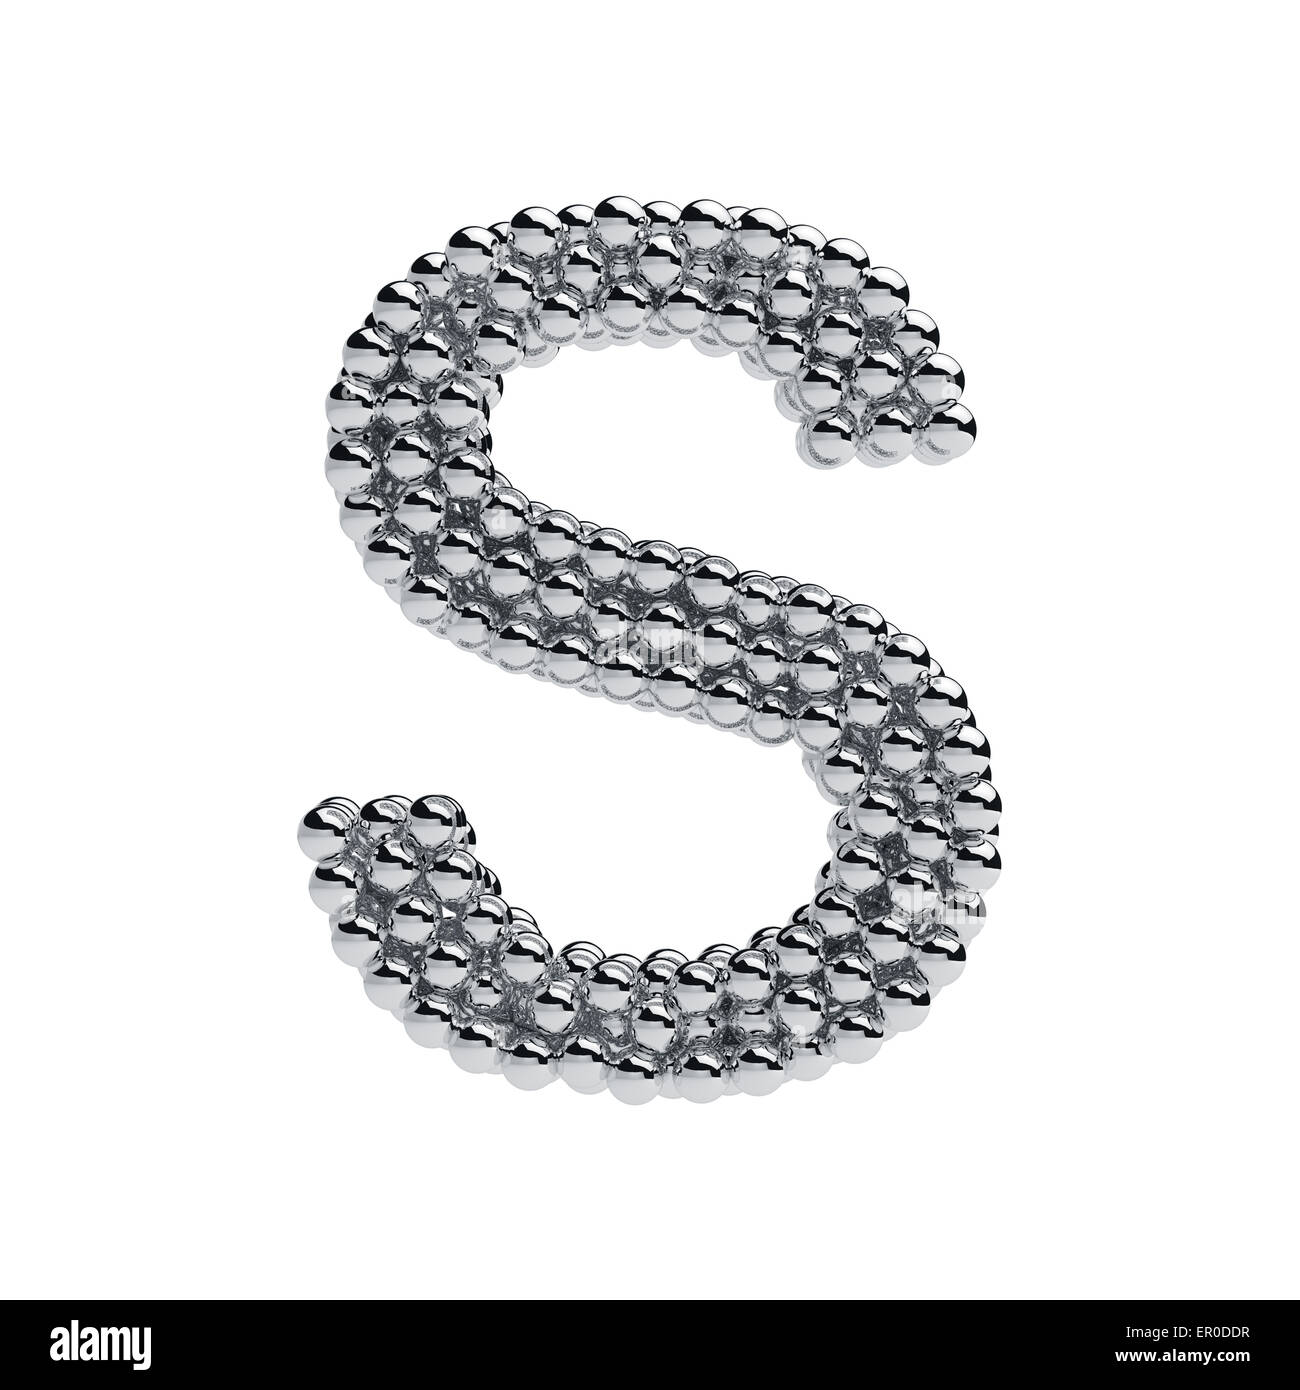 3d render of metallic spheres alphabet letter symbol - S. Isolated on white background Stock Photo